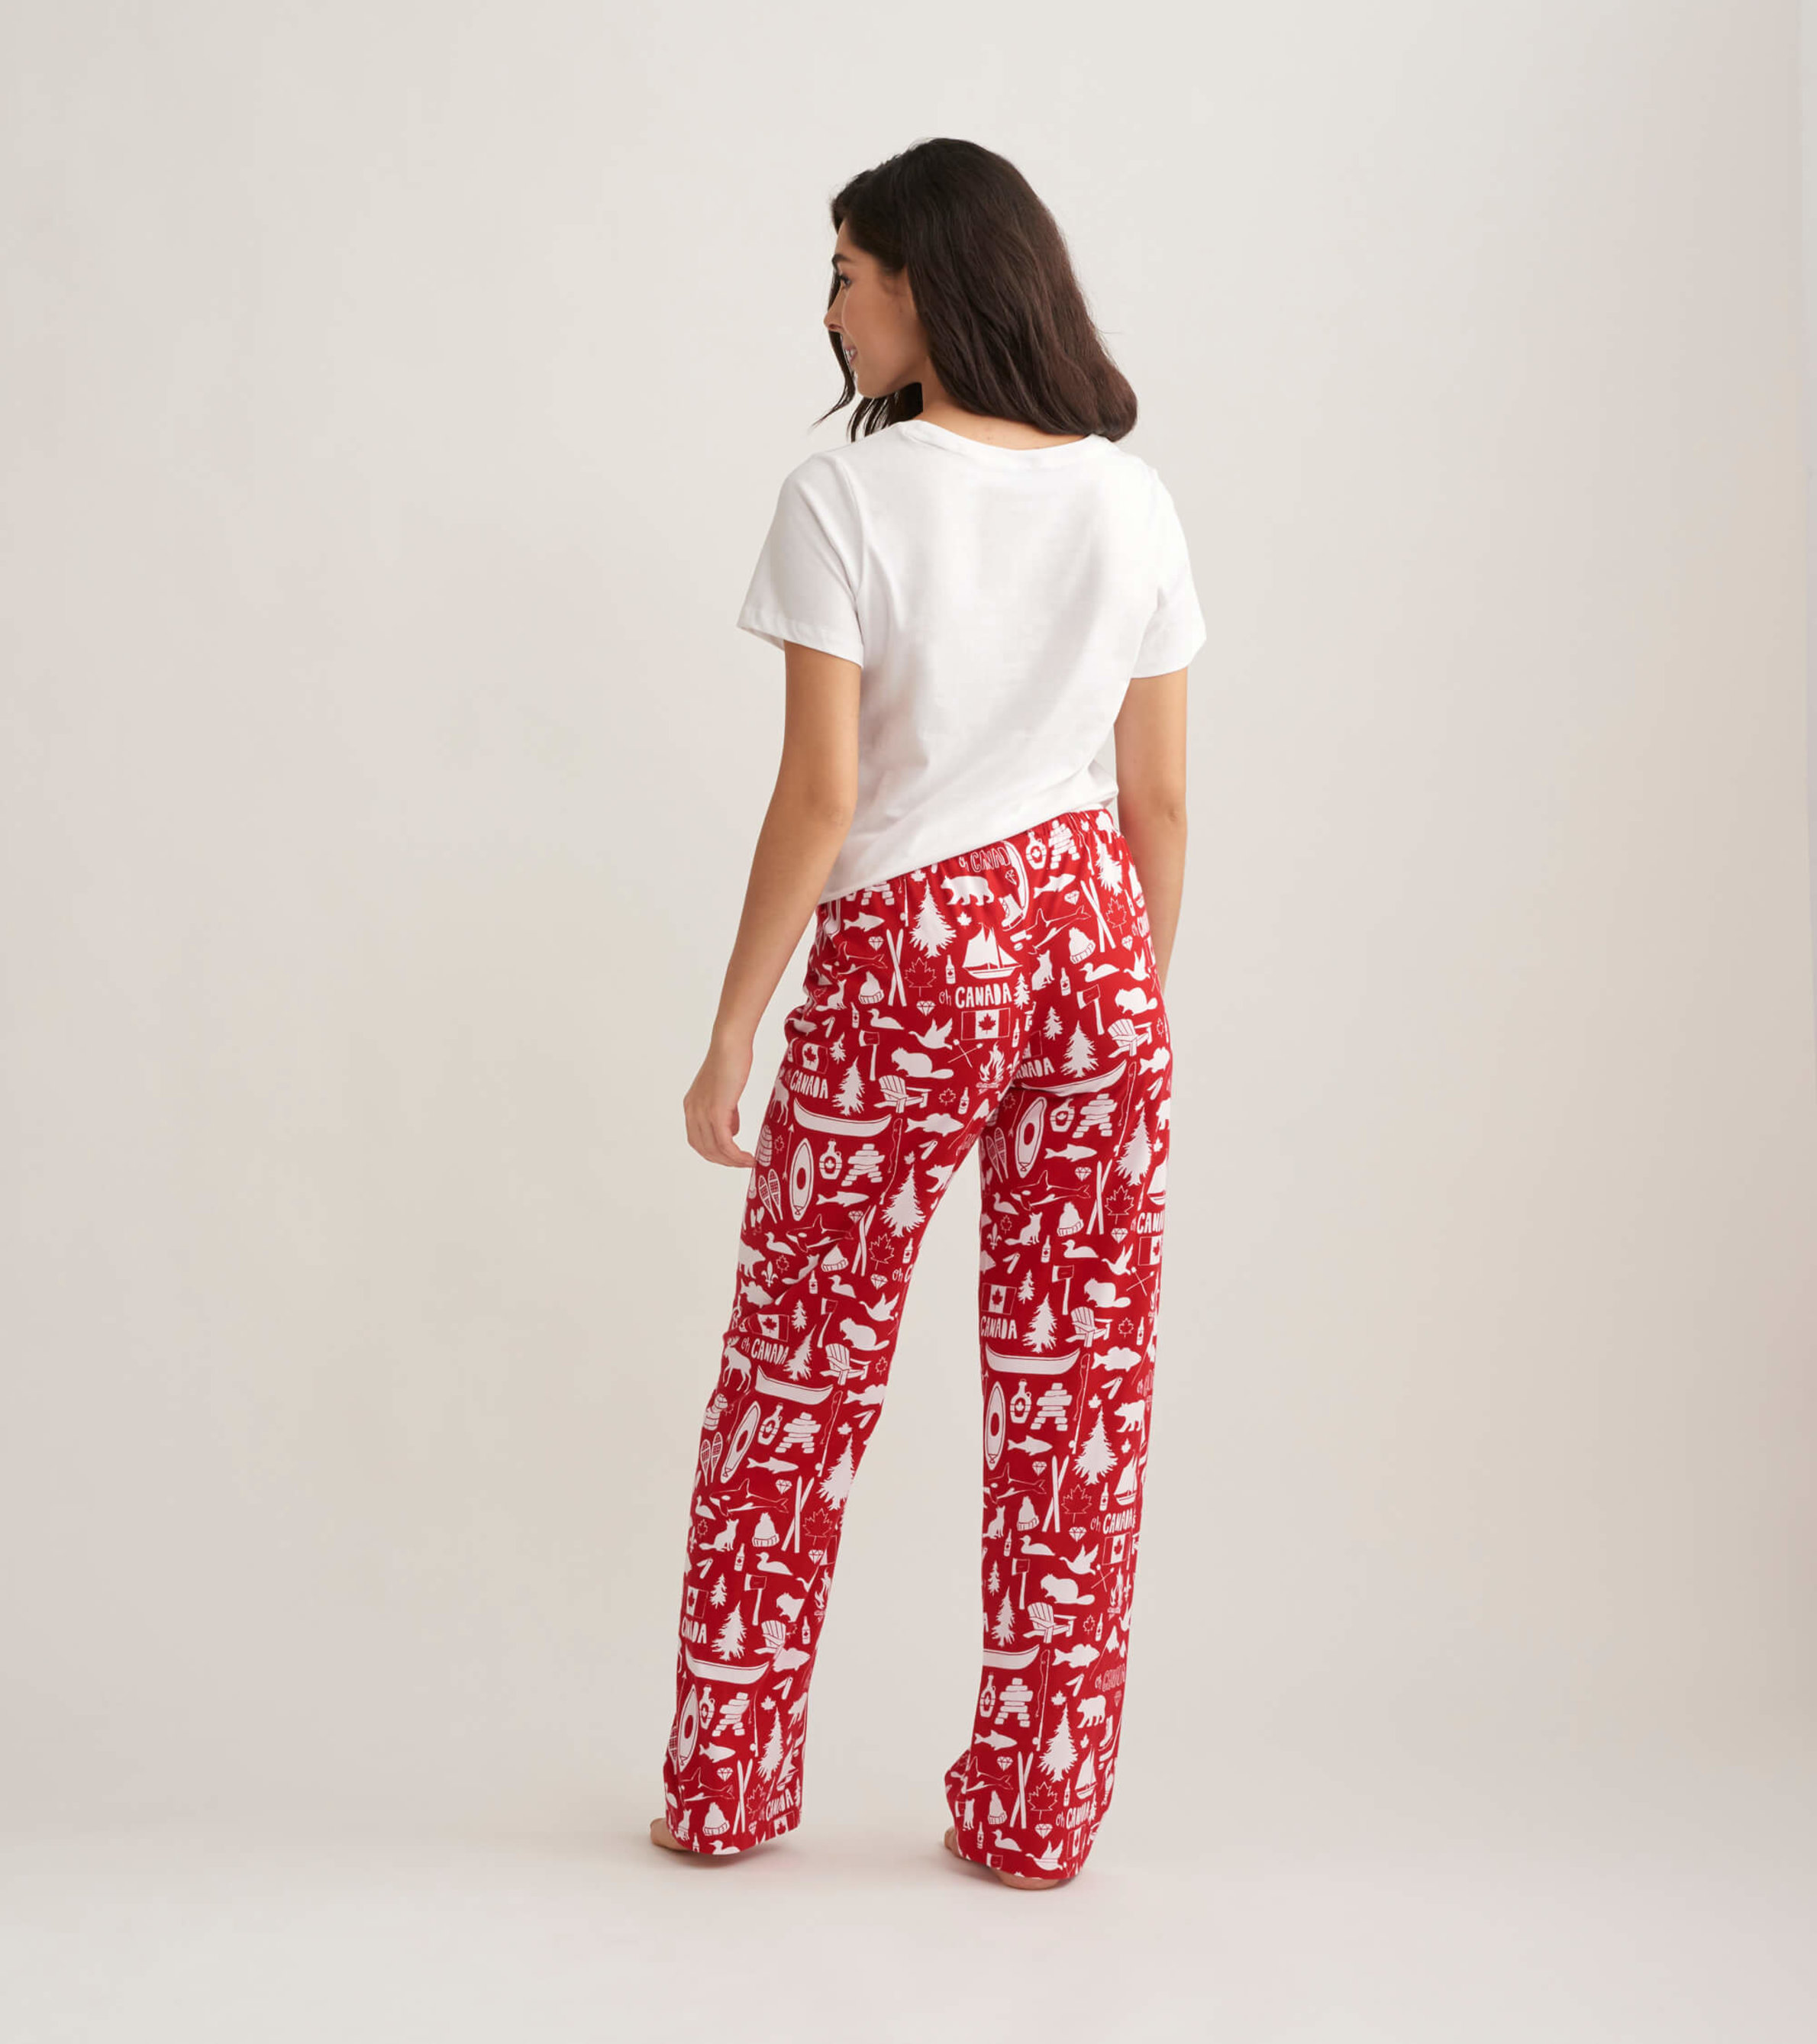 Large Size Women's Pajama Pants, Cotton Home Wear Pant